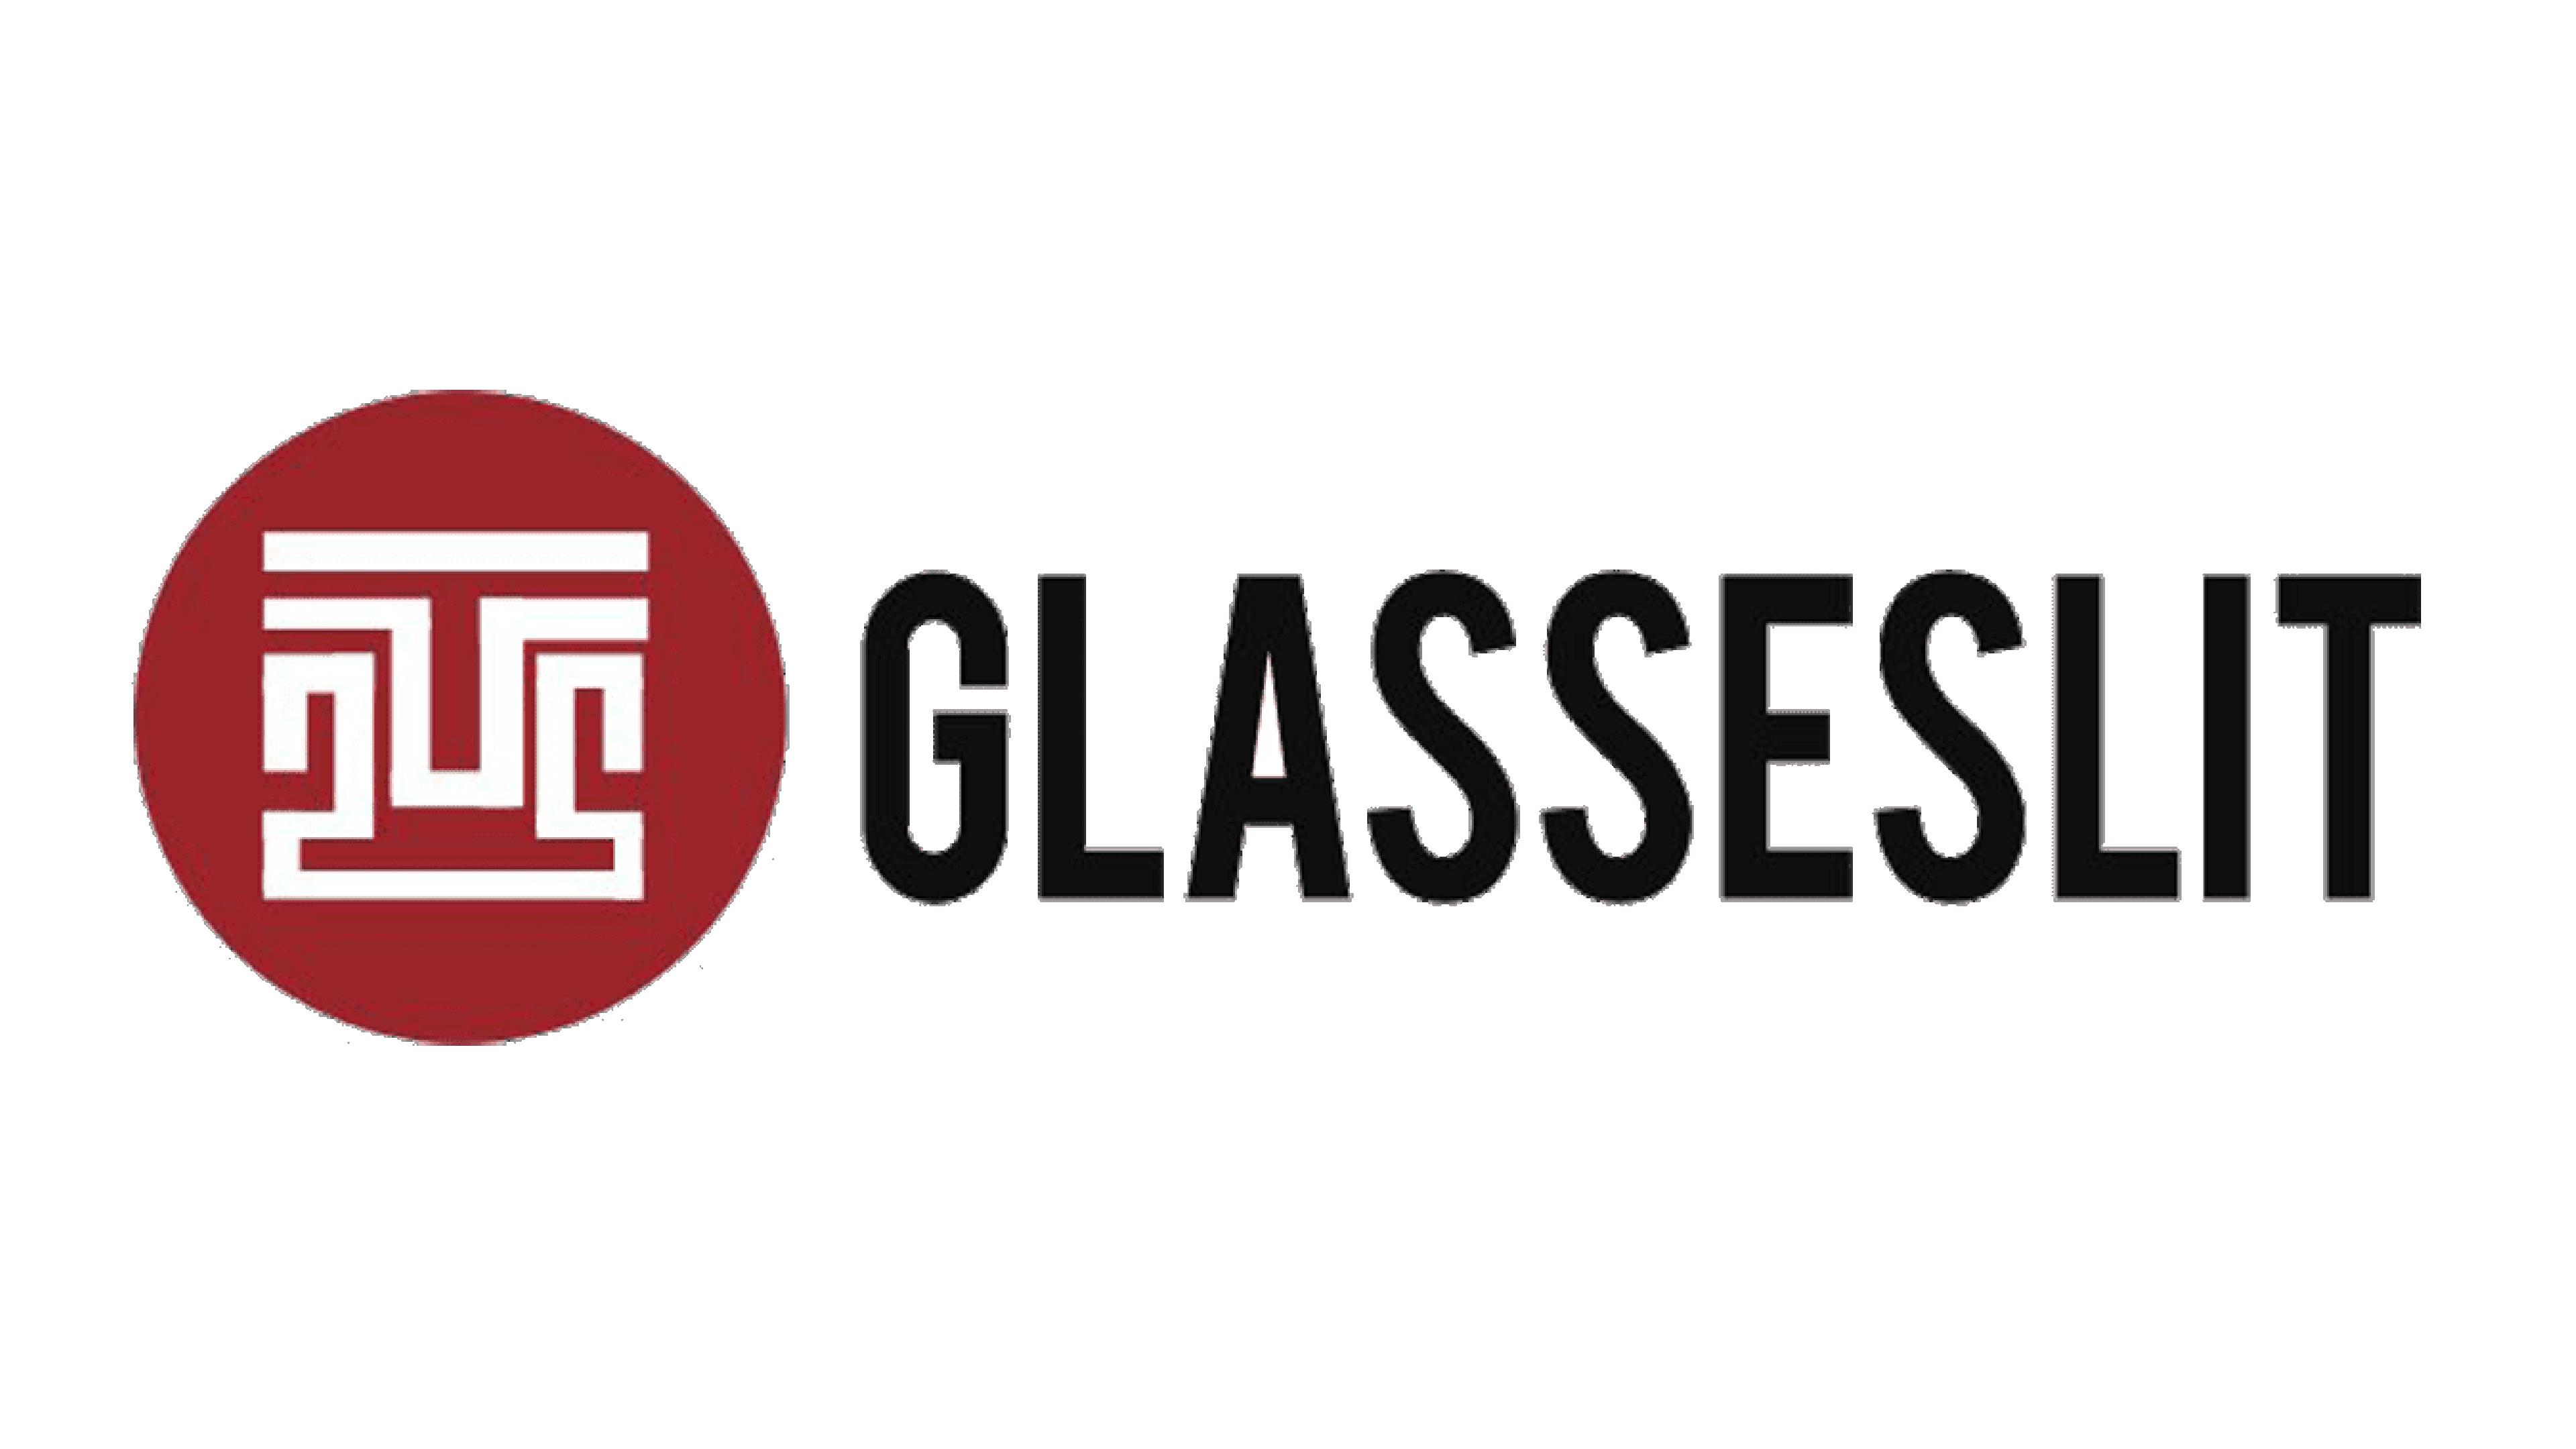 Glasseslit Student Discount Code Logo